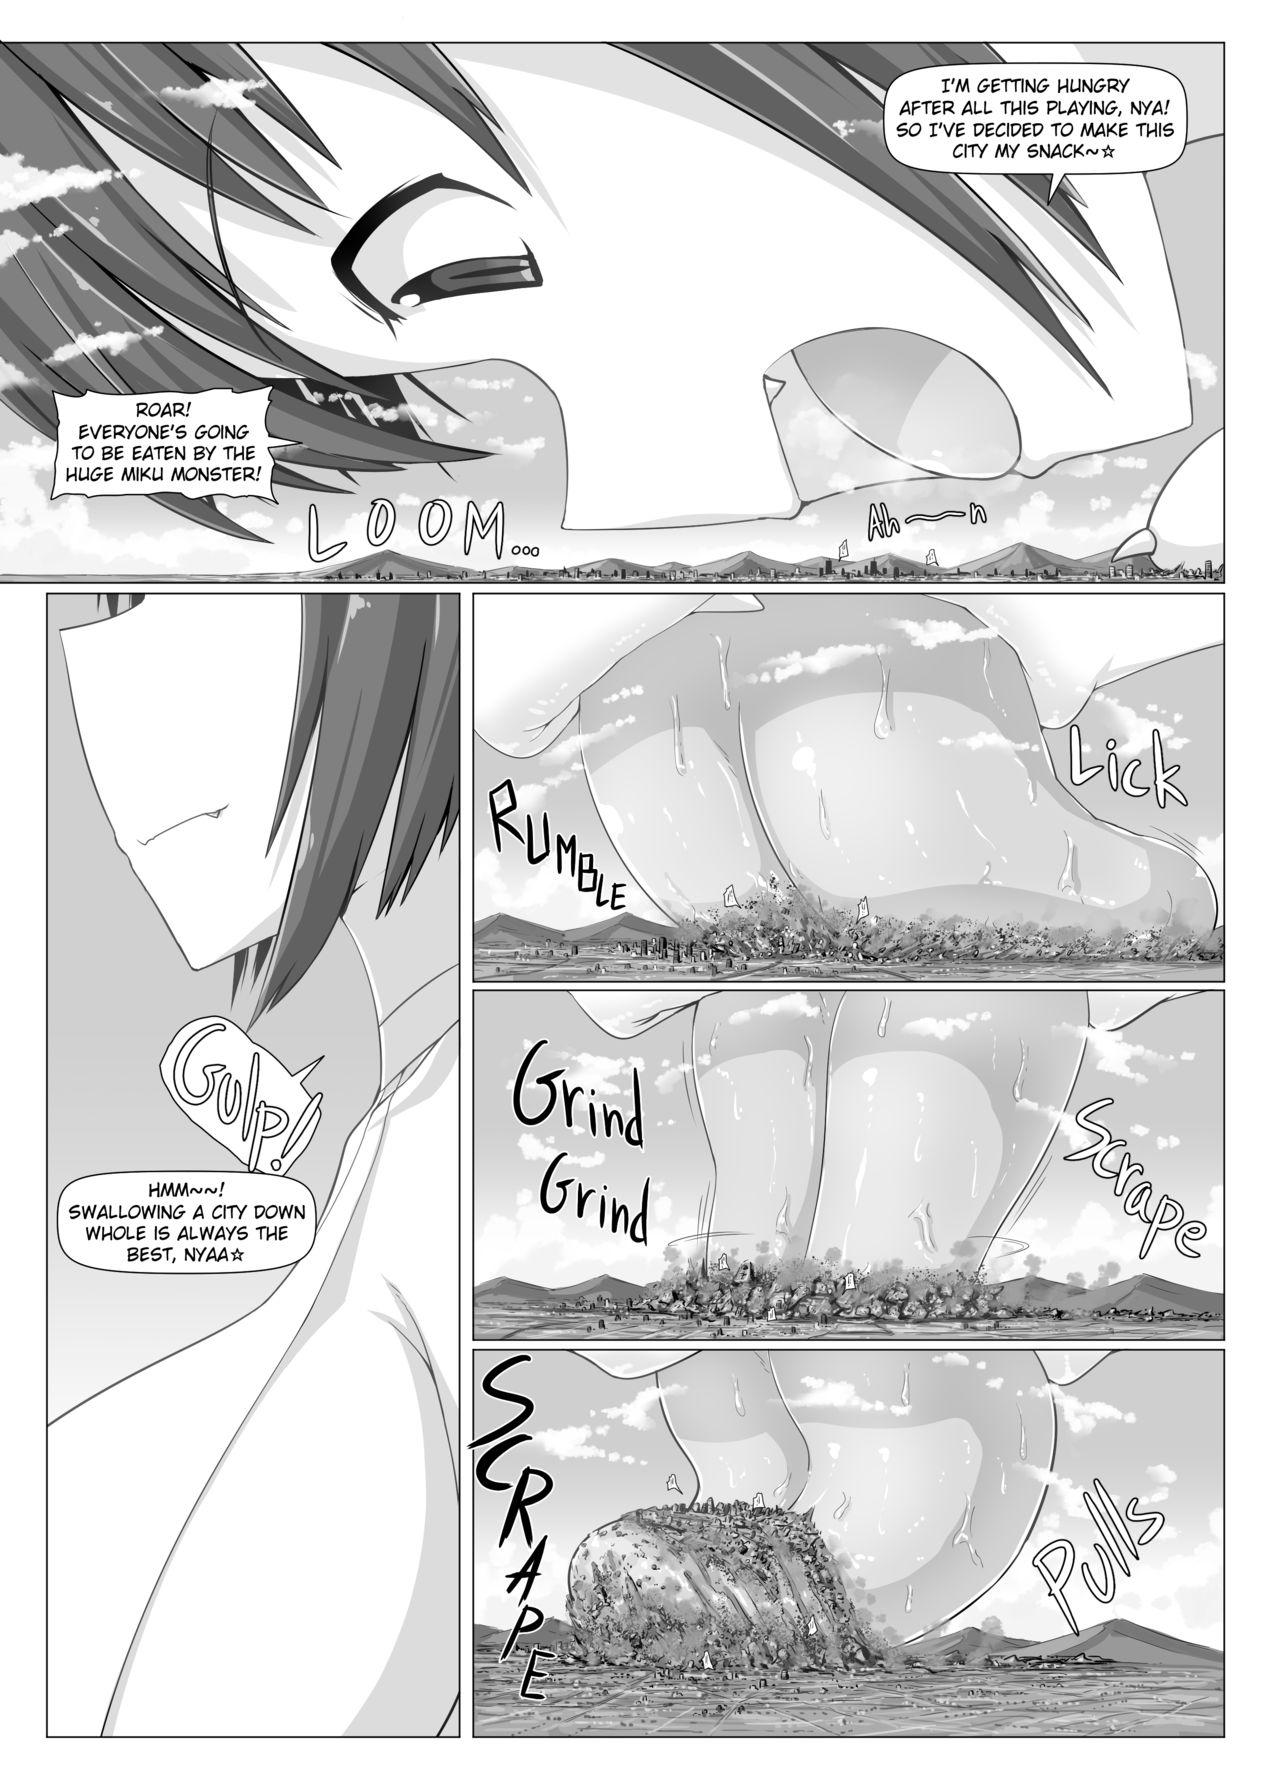 Hungarian Gigantic Miku-san - Original Exgirlfriend - Page 5